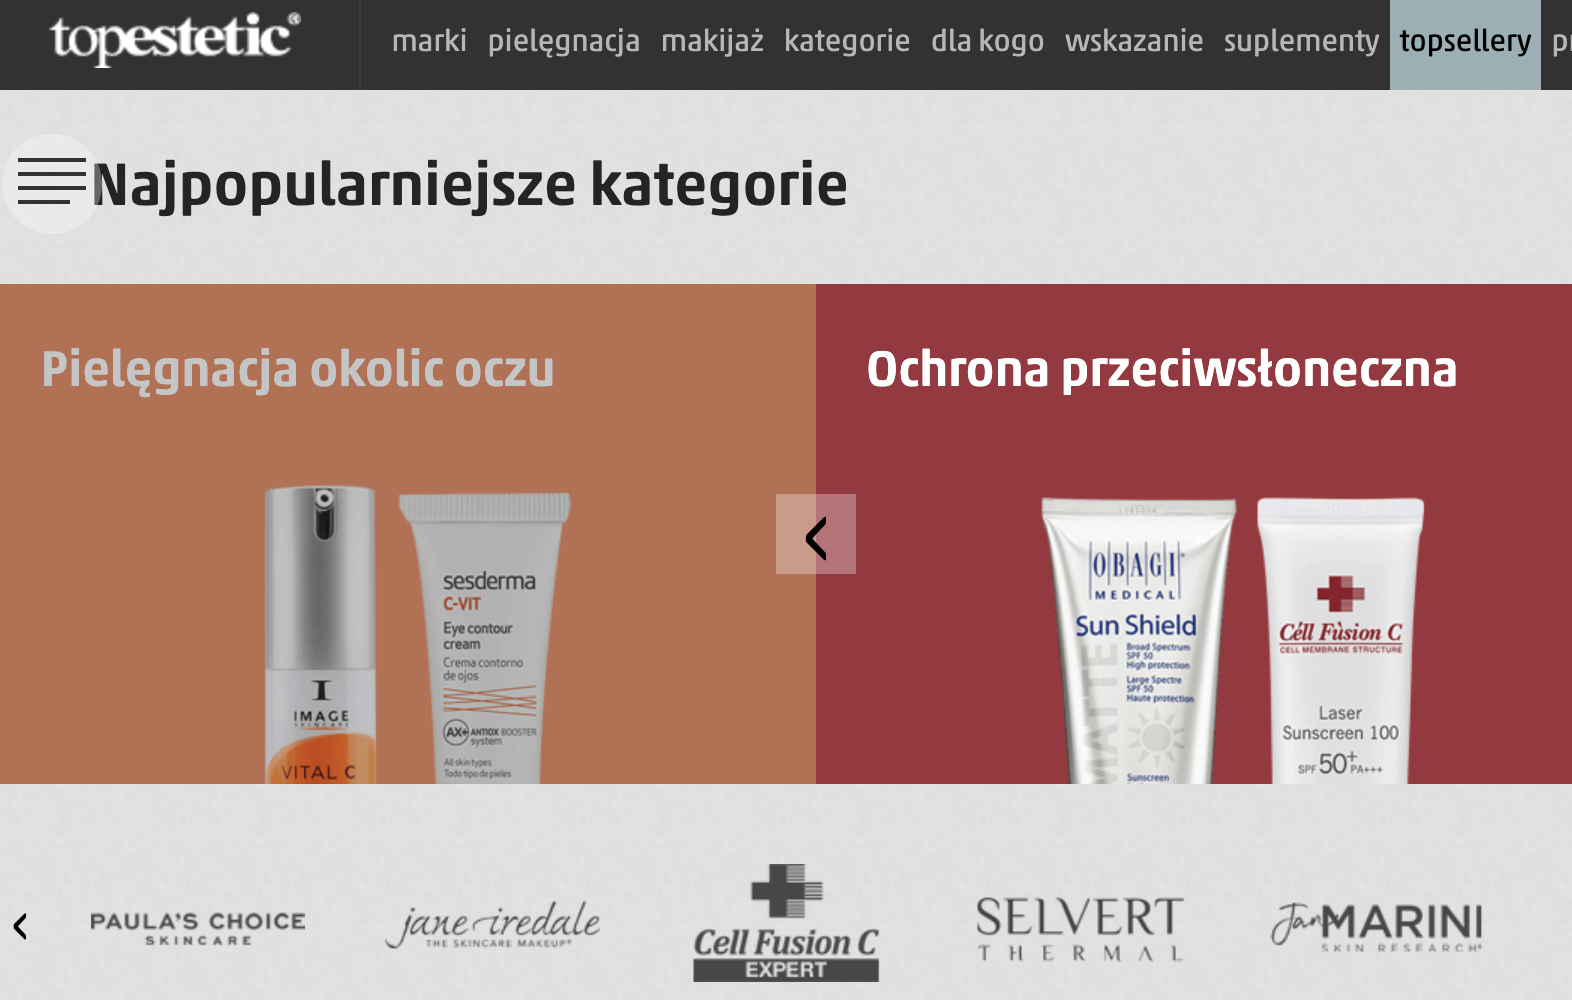 topestetic.pl: widok sklepu internetowego